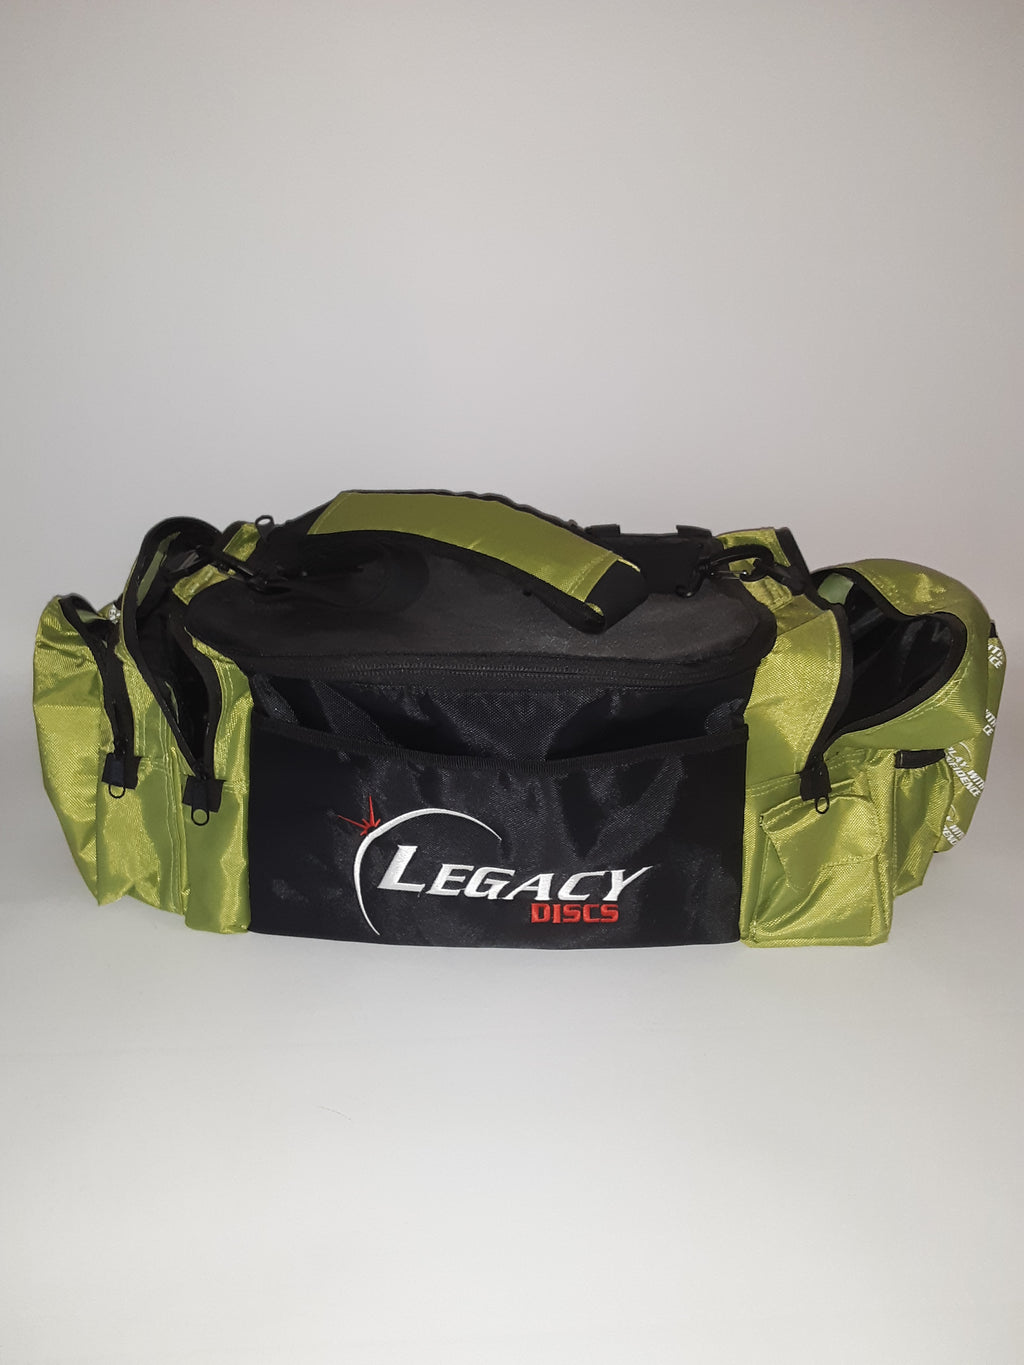 Alliance Bag ( Legacy )